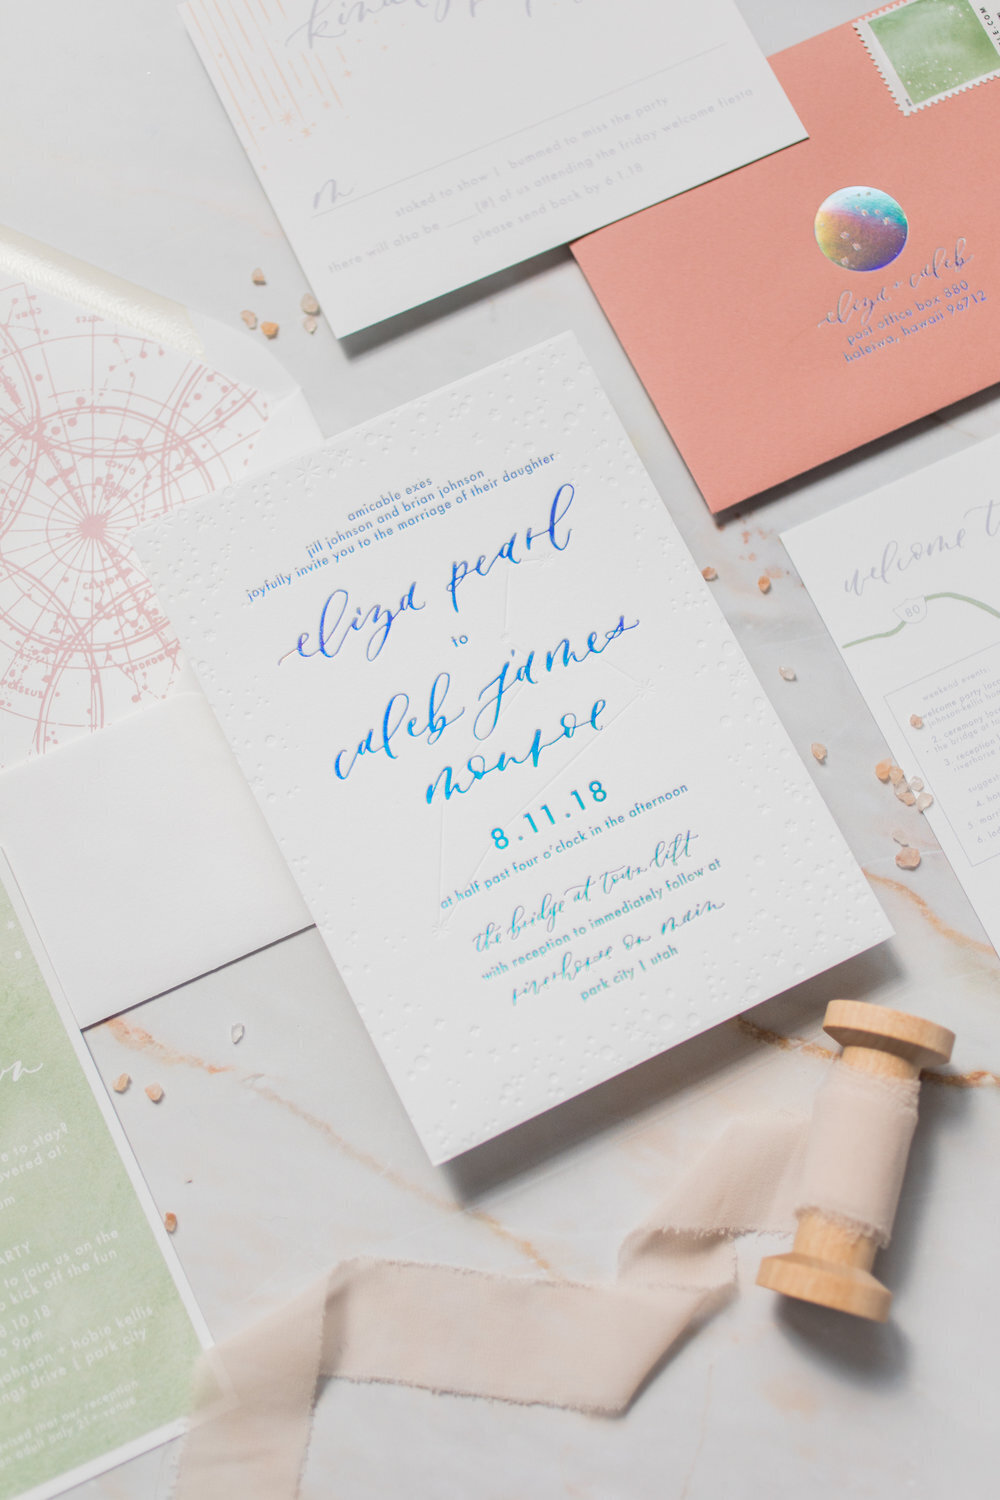 Starry+holographic+wedding+invitations